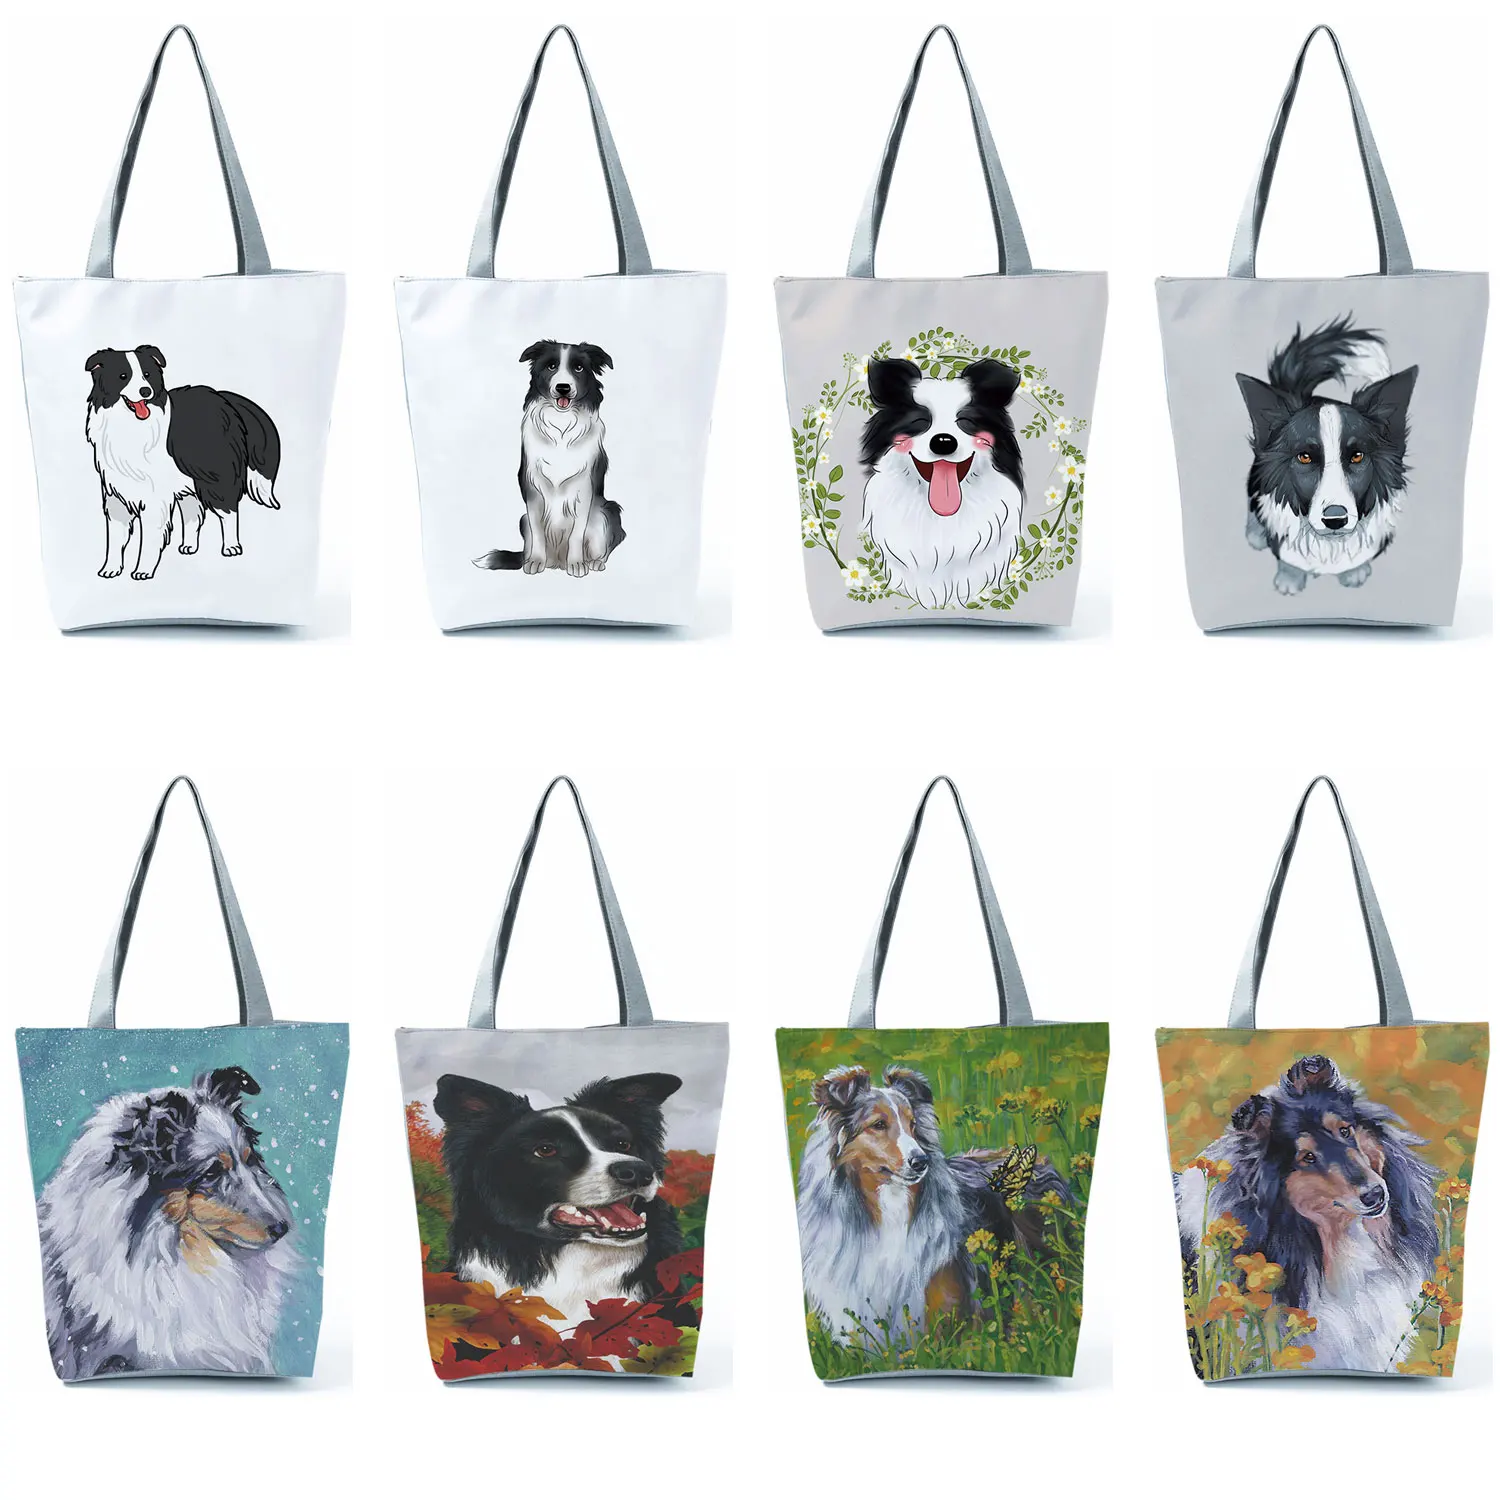 

Charles Spaniel Dog Print Women's Handbags Fashion Tote Portable Shoulder Bags Useful Large Capacity Shopping Bag Bolsa Feminina